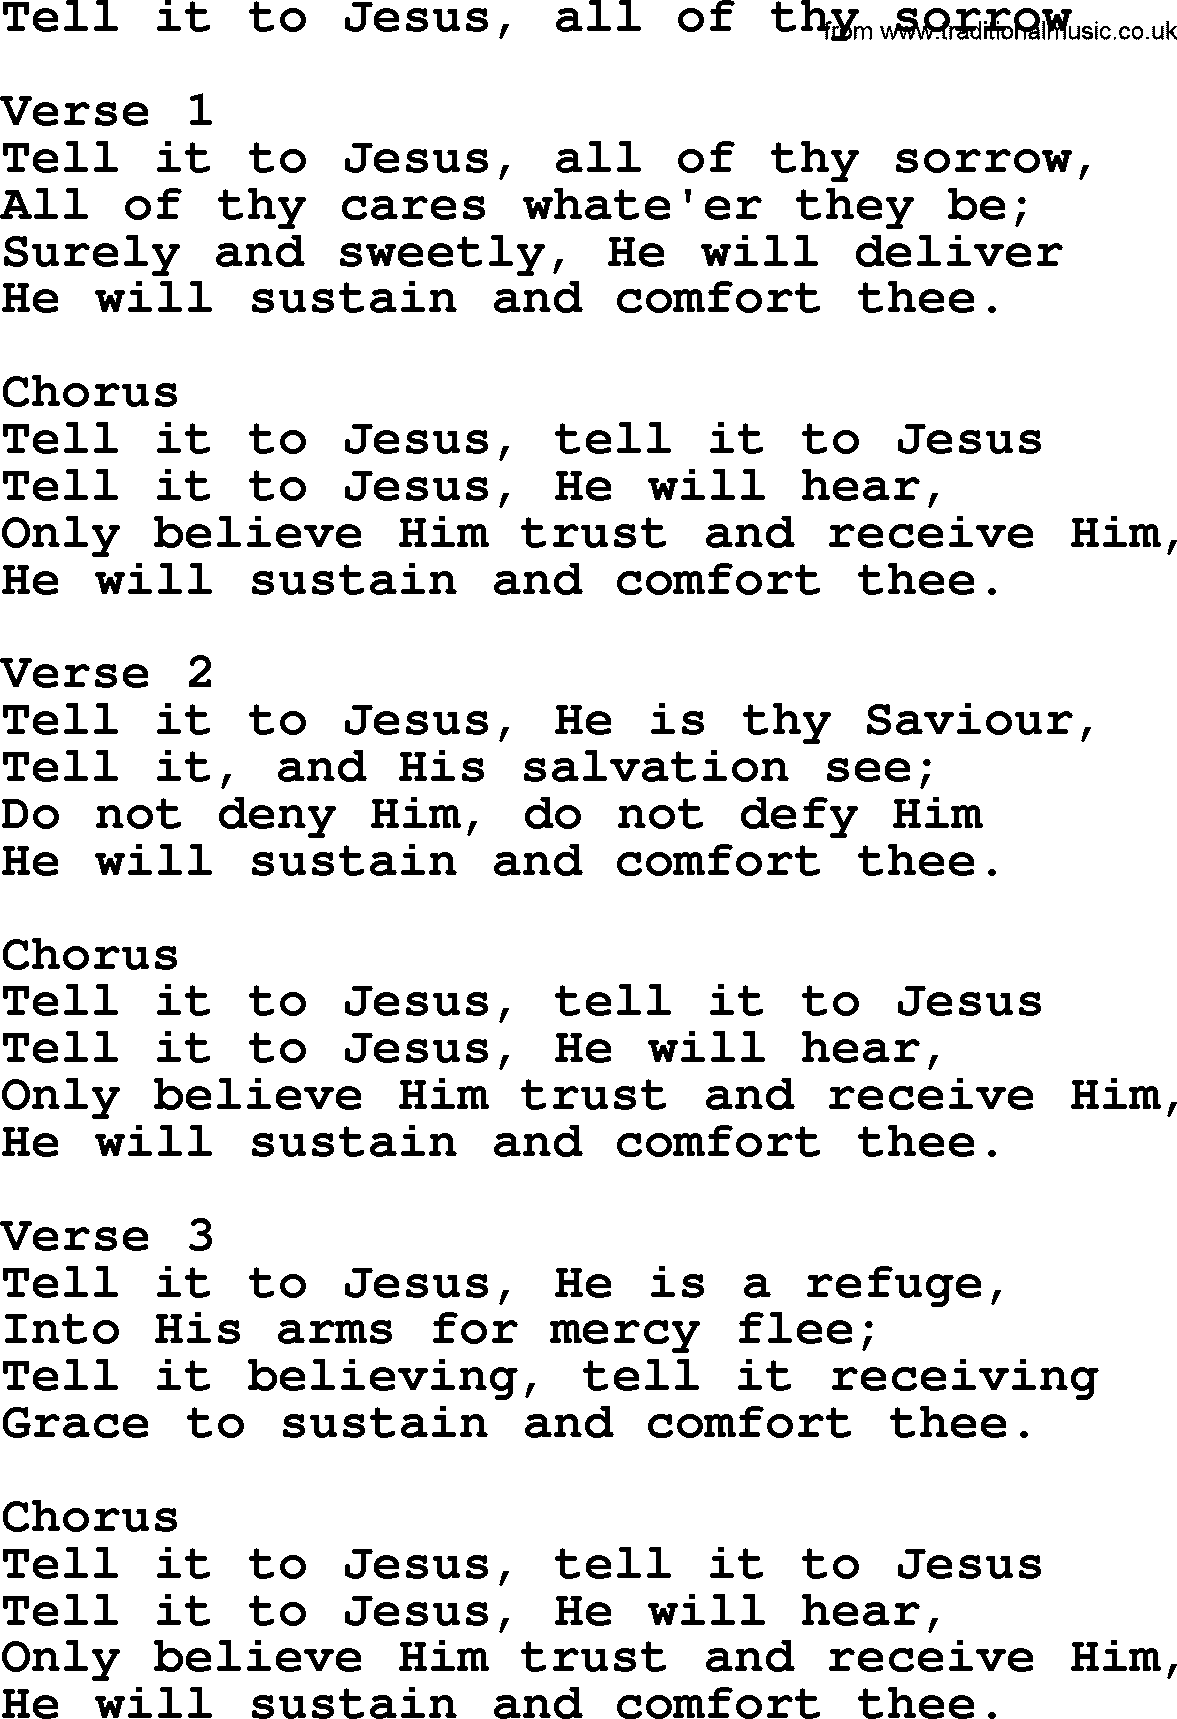 Apostolic and Pentecostal Hymns and Gospel Songs, Hymn: Tell It To Jesus, All Of Thy Sorrow, Christian lyrics and PDF